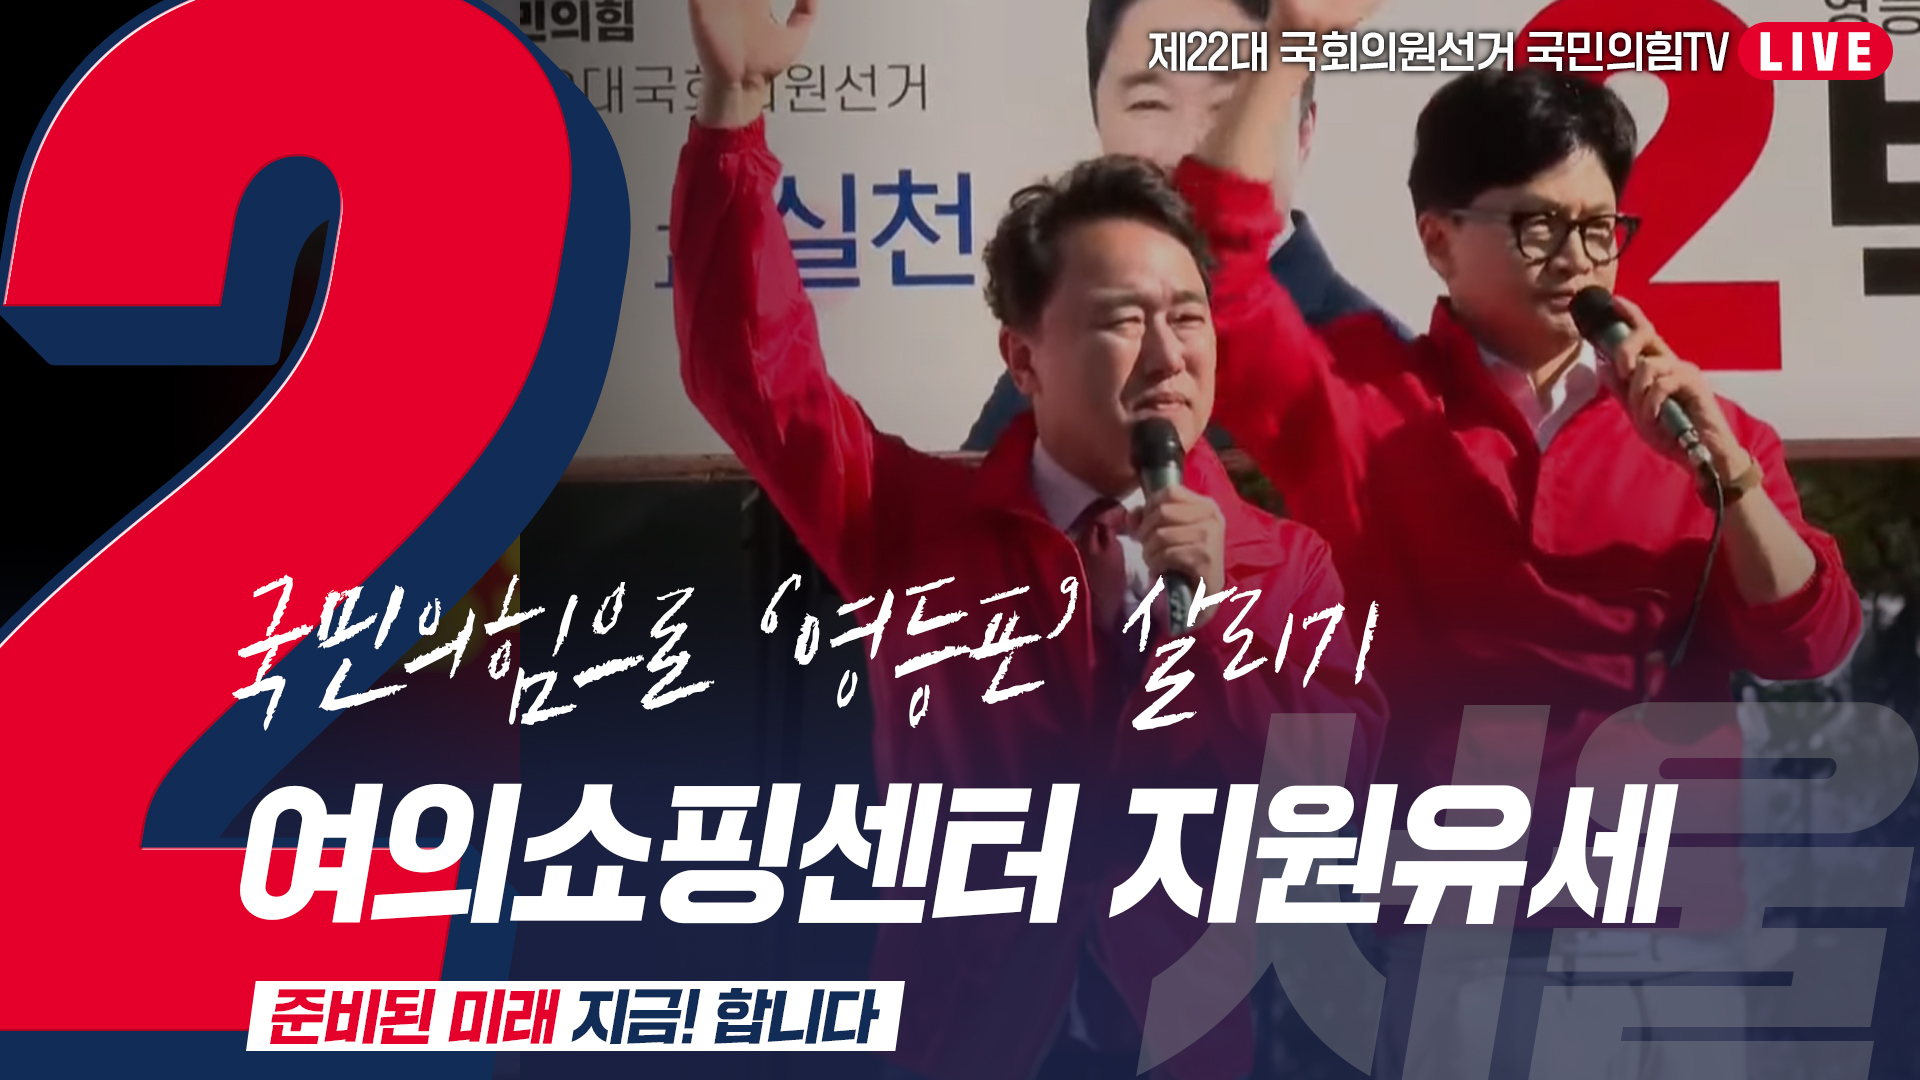 [Live] 4월 9일 ‘국민의힘으로 영등포살리기’ 여의쇼핑센터 지원유세